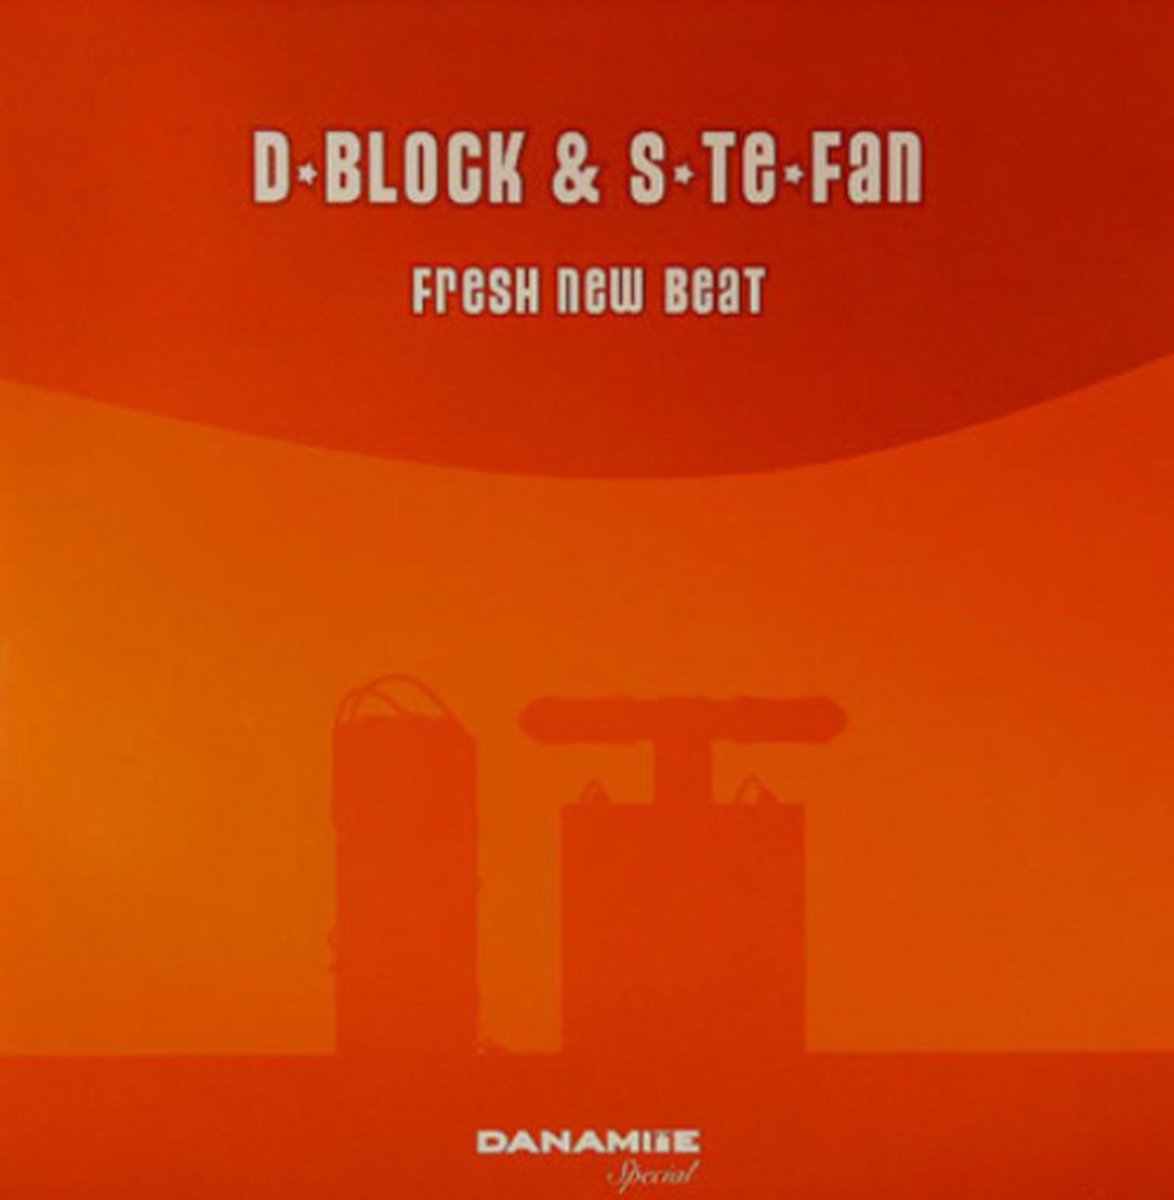 Fresh New Beat - D*block & S*te*fan